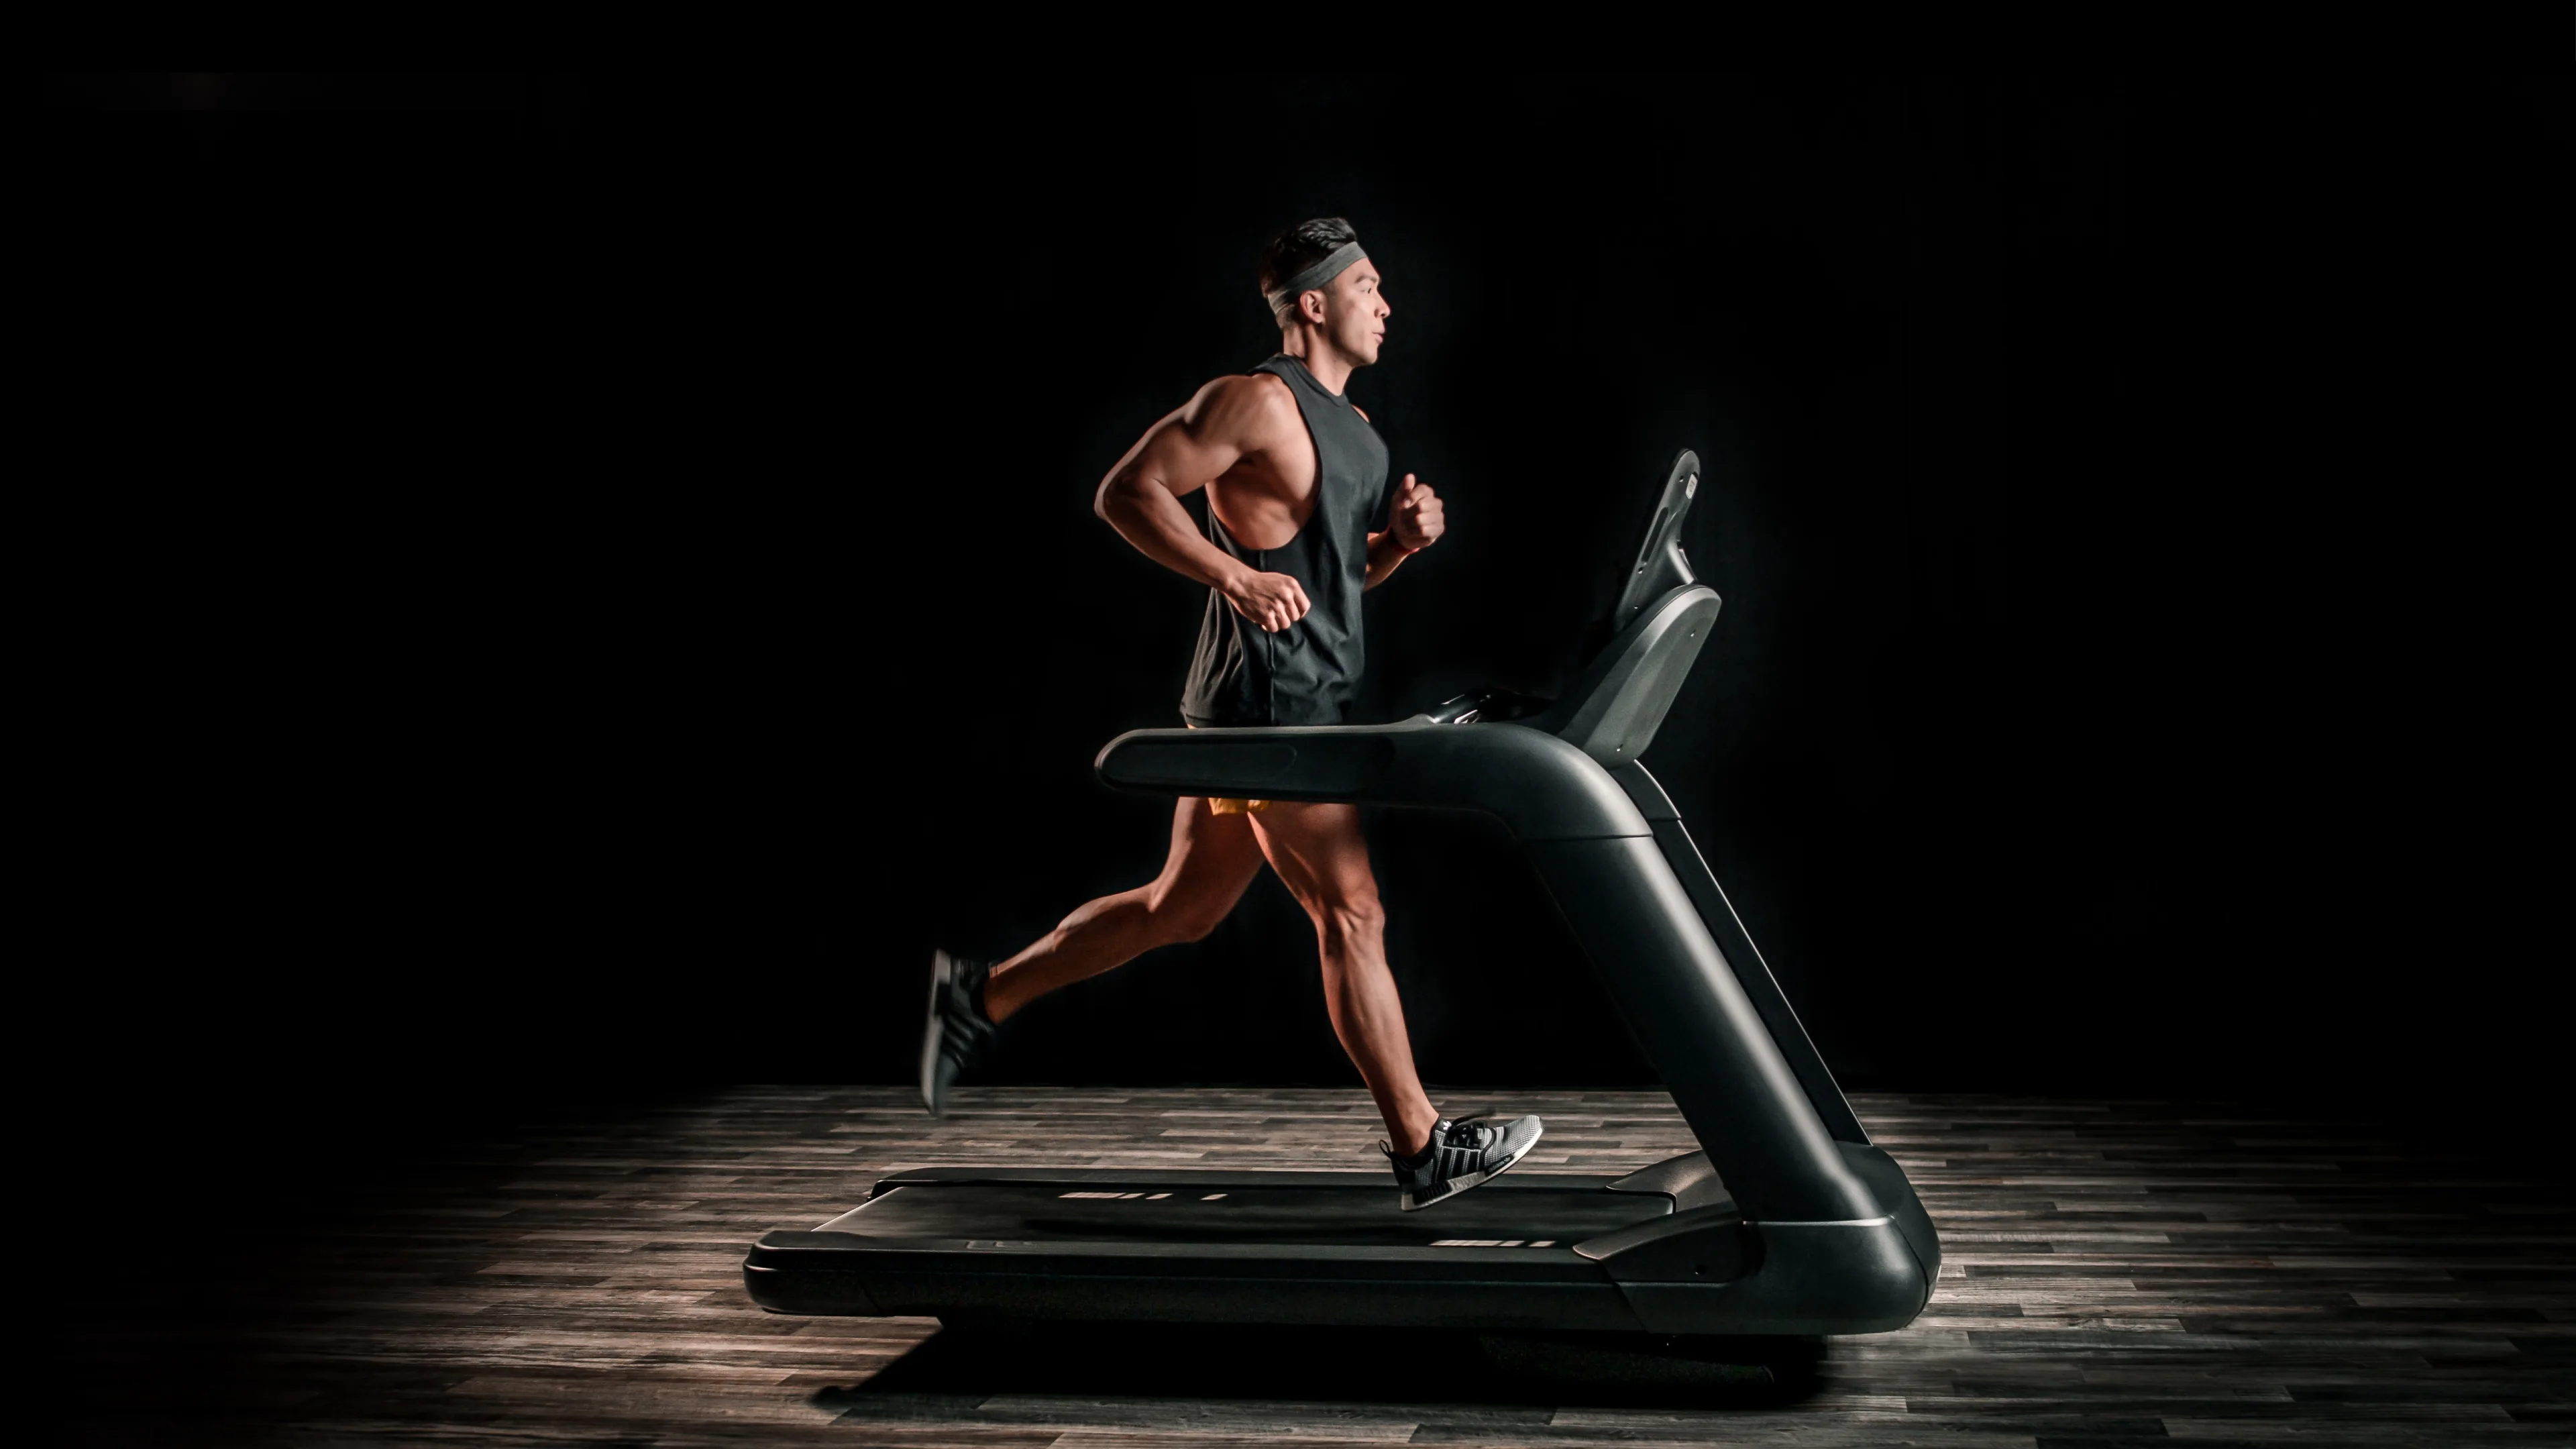 Exerciser running on a Precor treadmill (TRM)